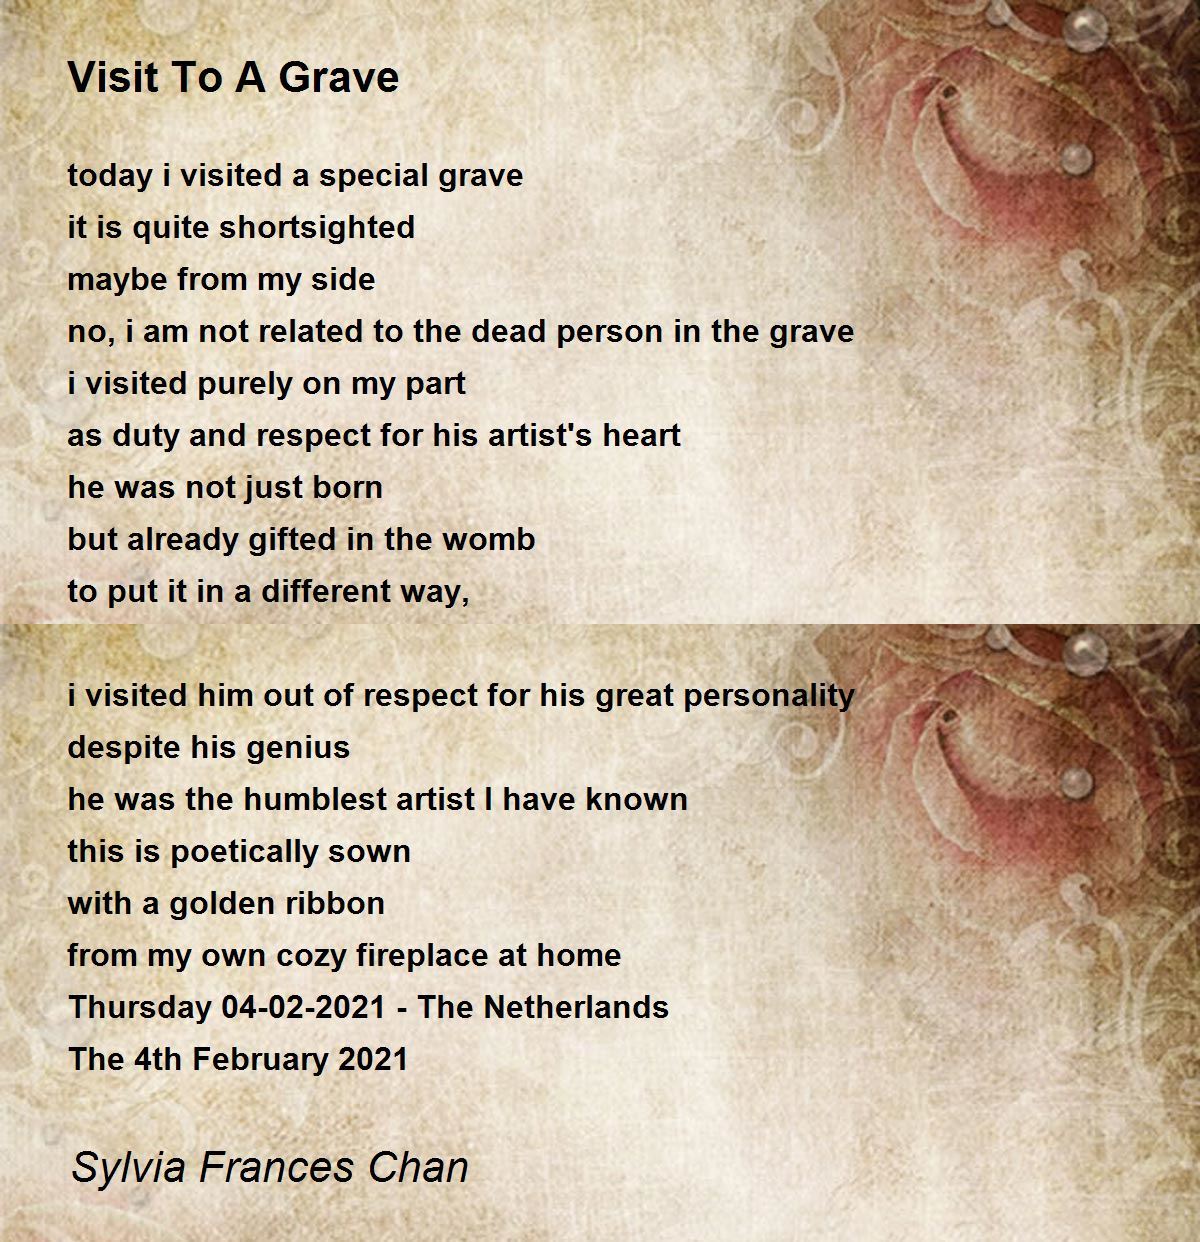 come visit my grave poem